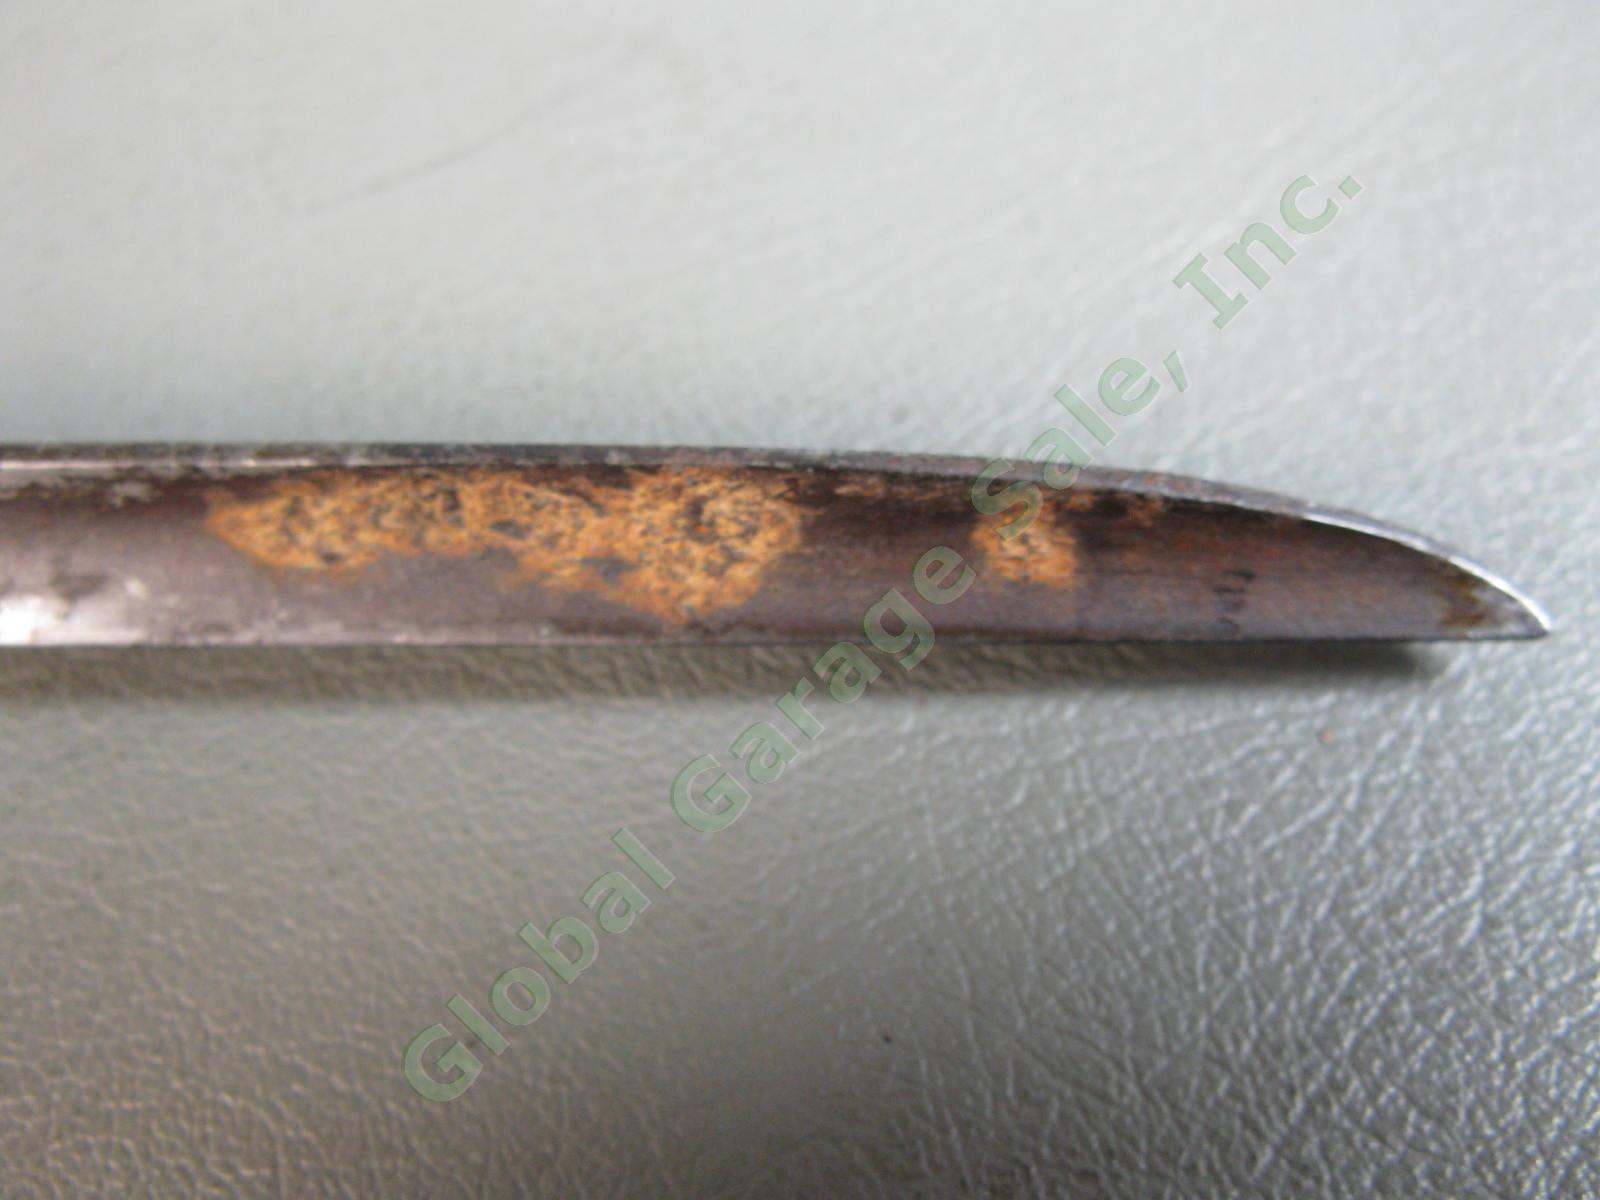 Antique Pre Civil War Socket Bayonet Triangular Fuller Blade Lovell Catch Marked 6